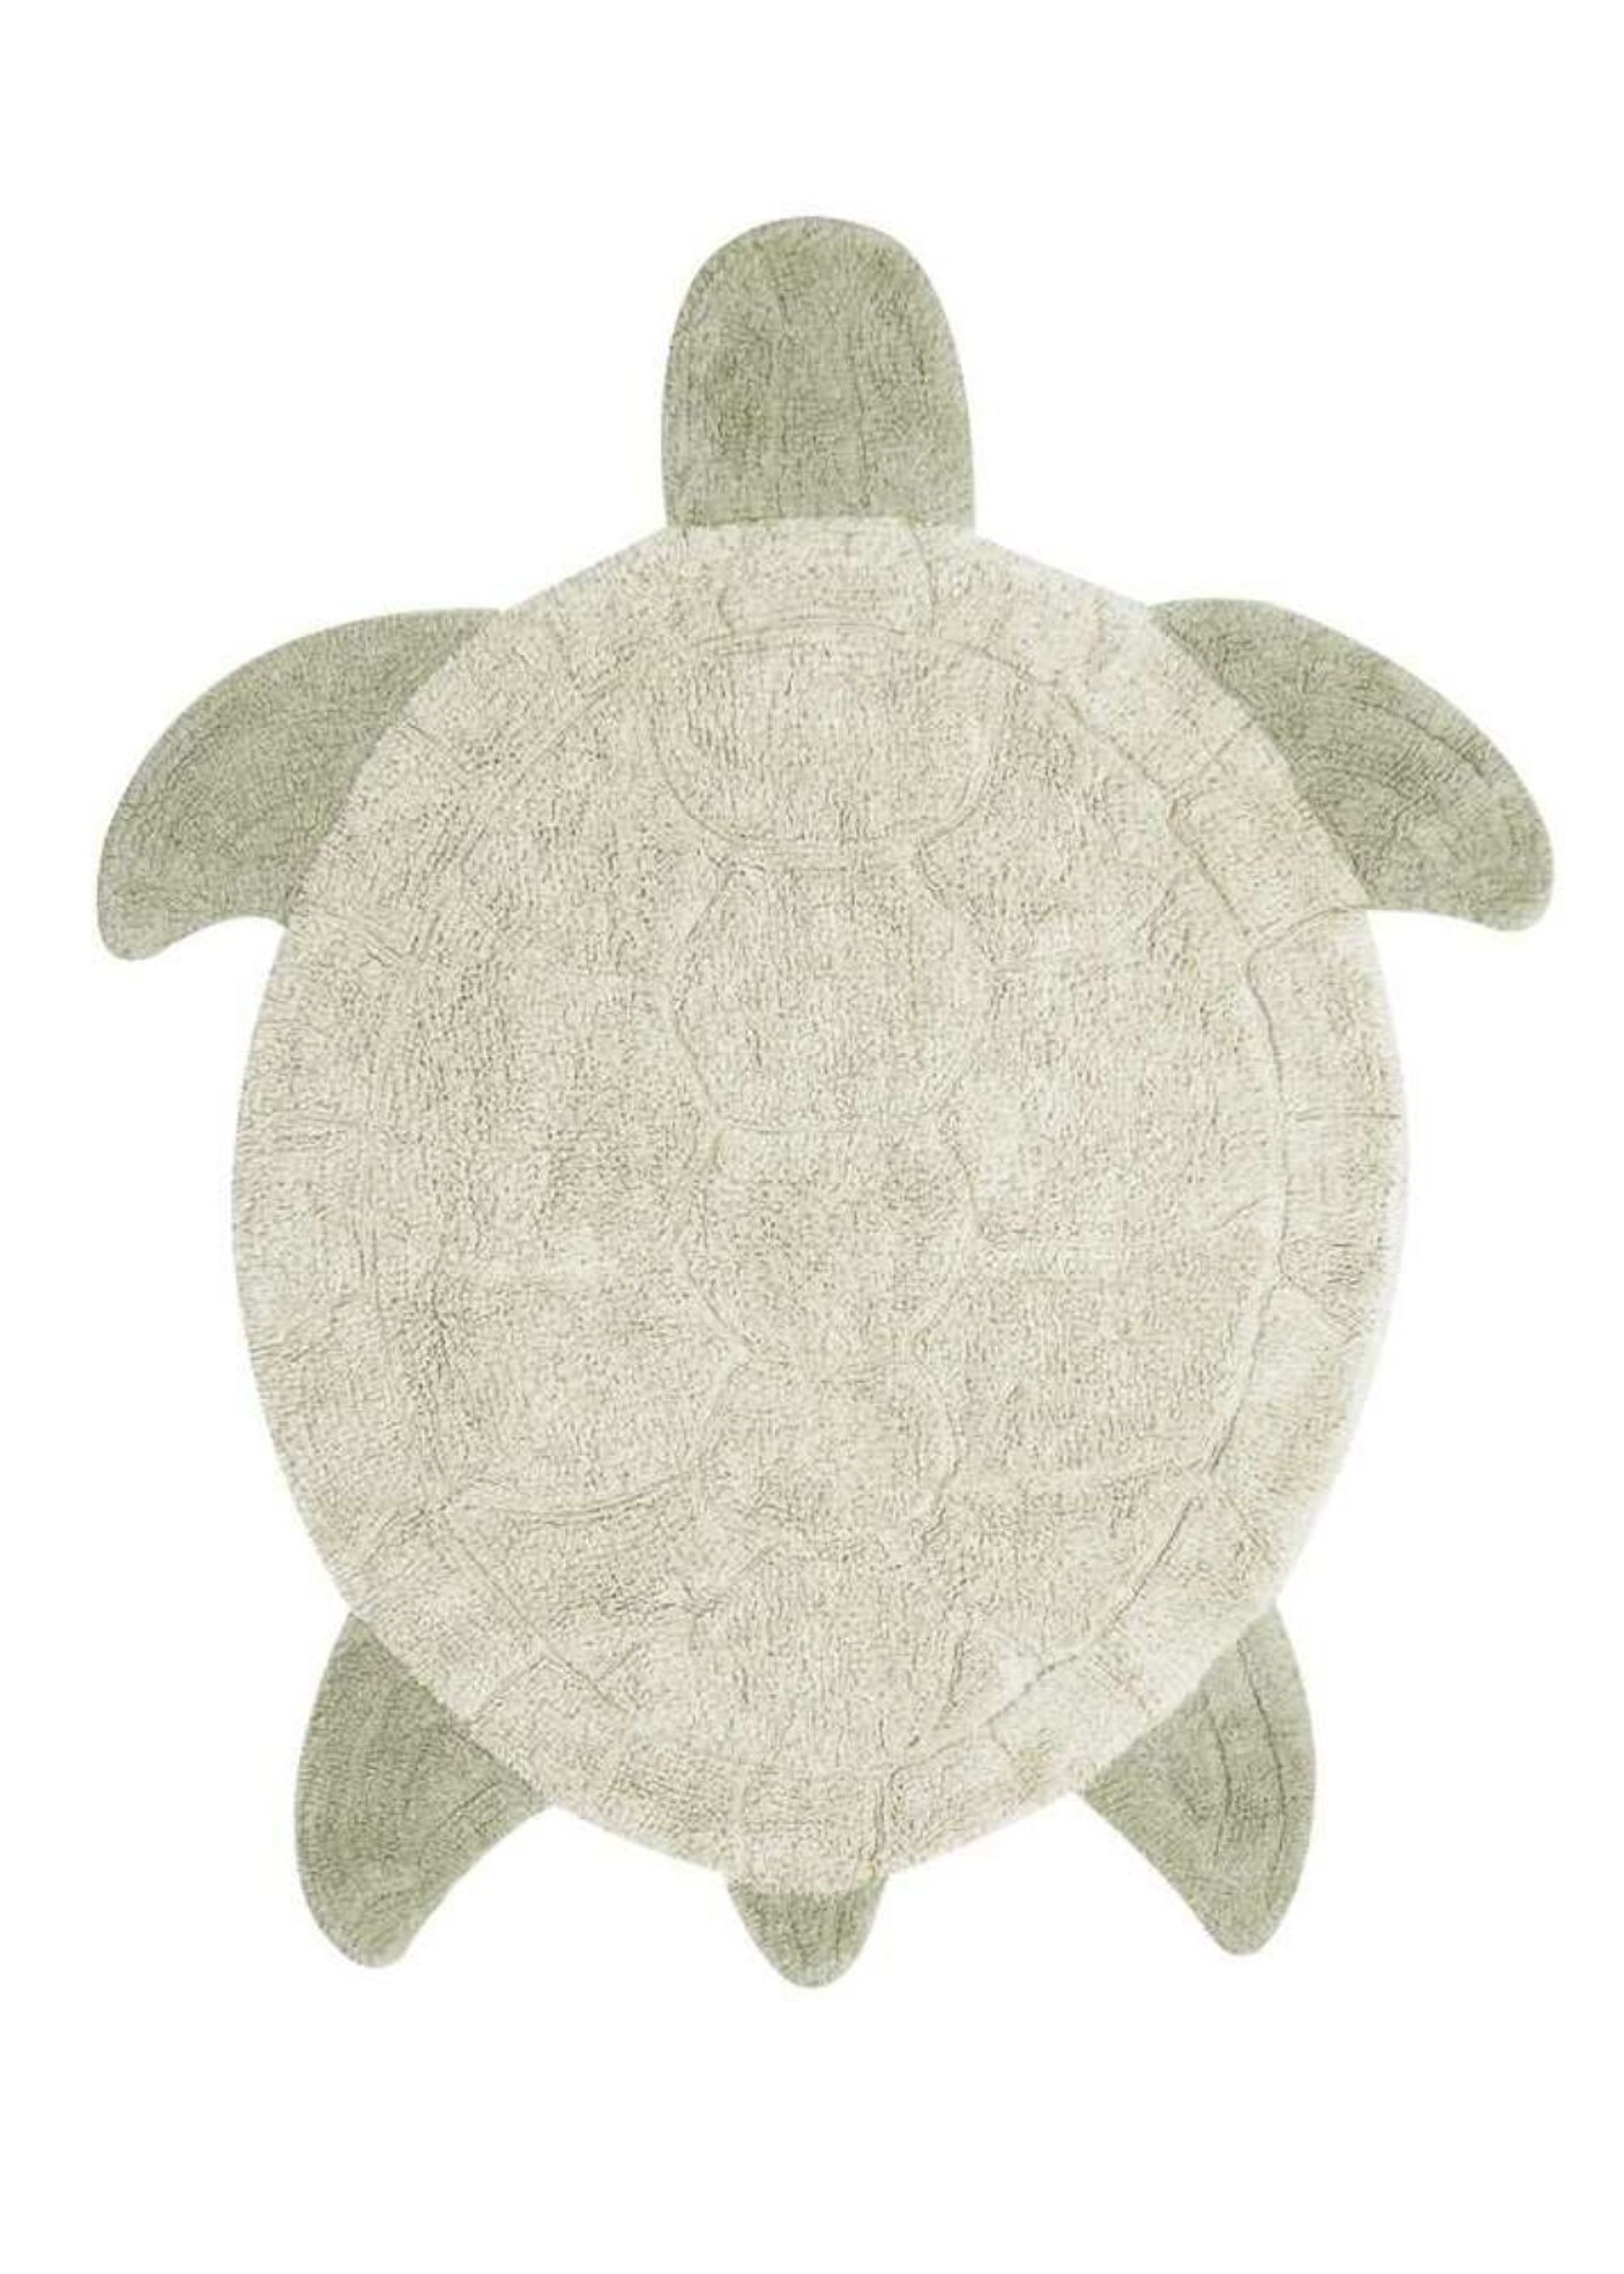 Lorena Canals - Tapis pour enfants - Washable Rug Sea Turtle - Sea Turtle